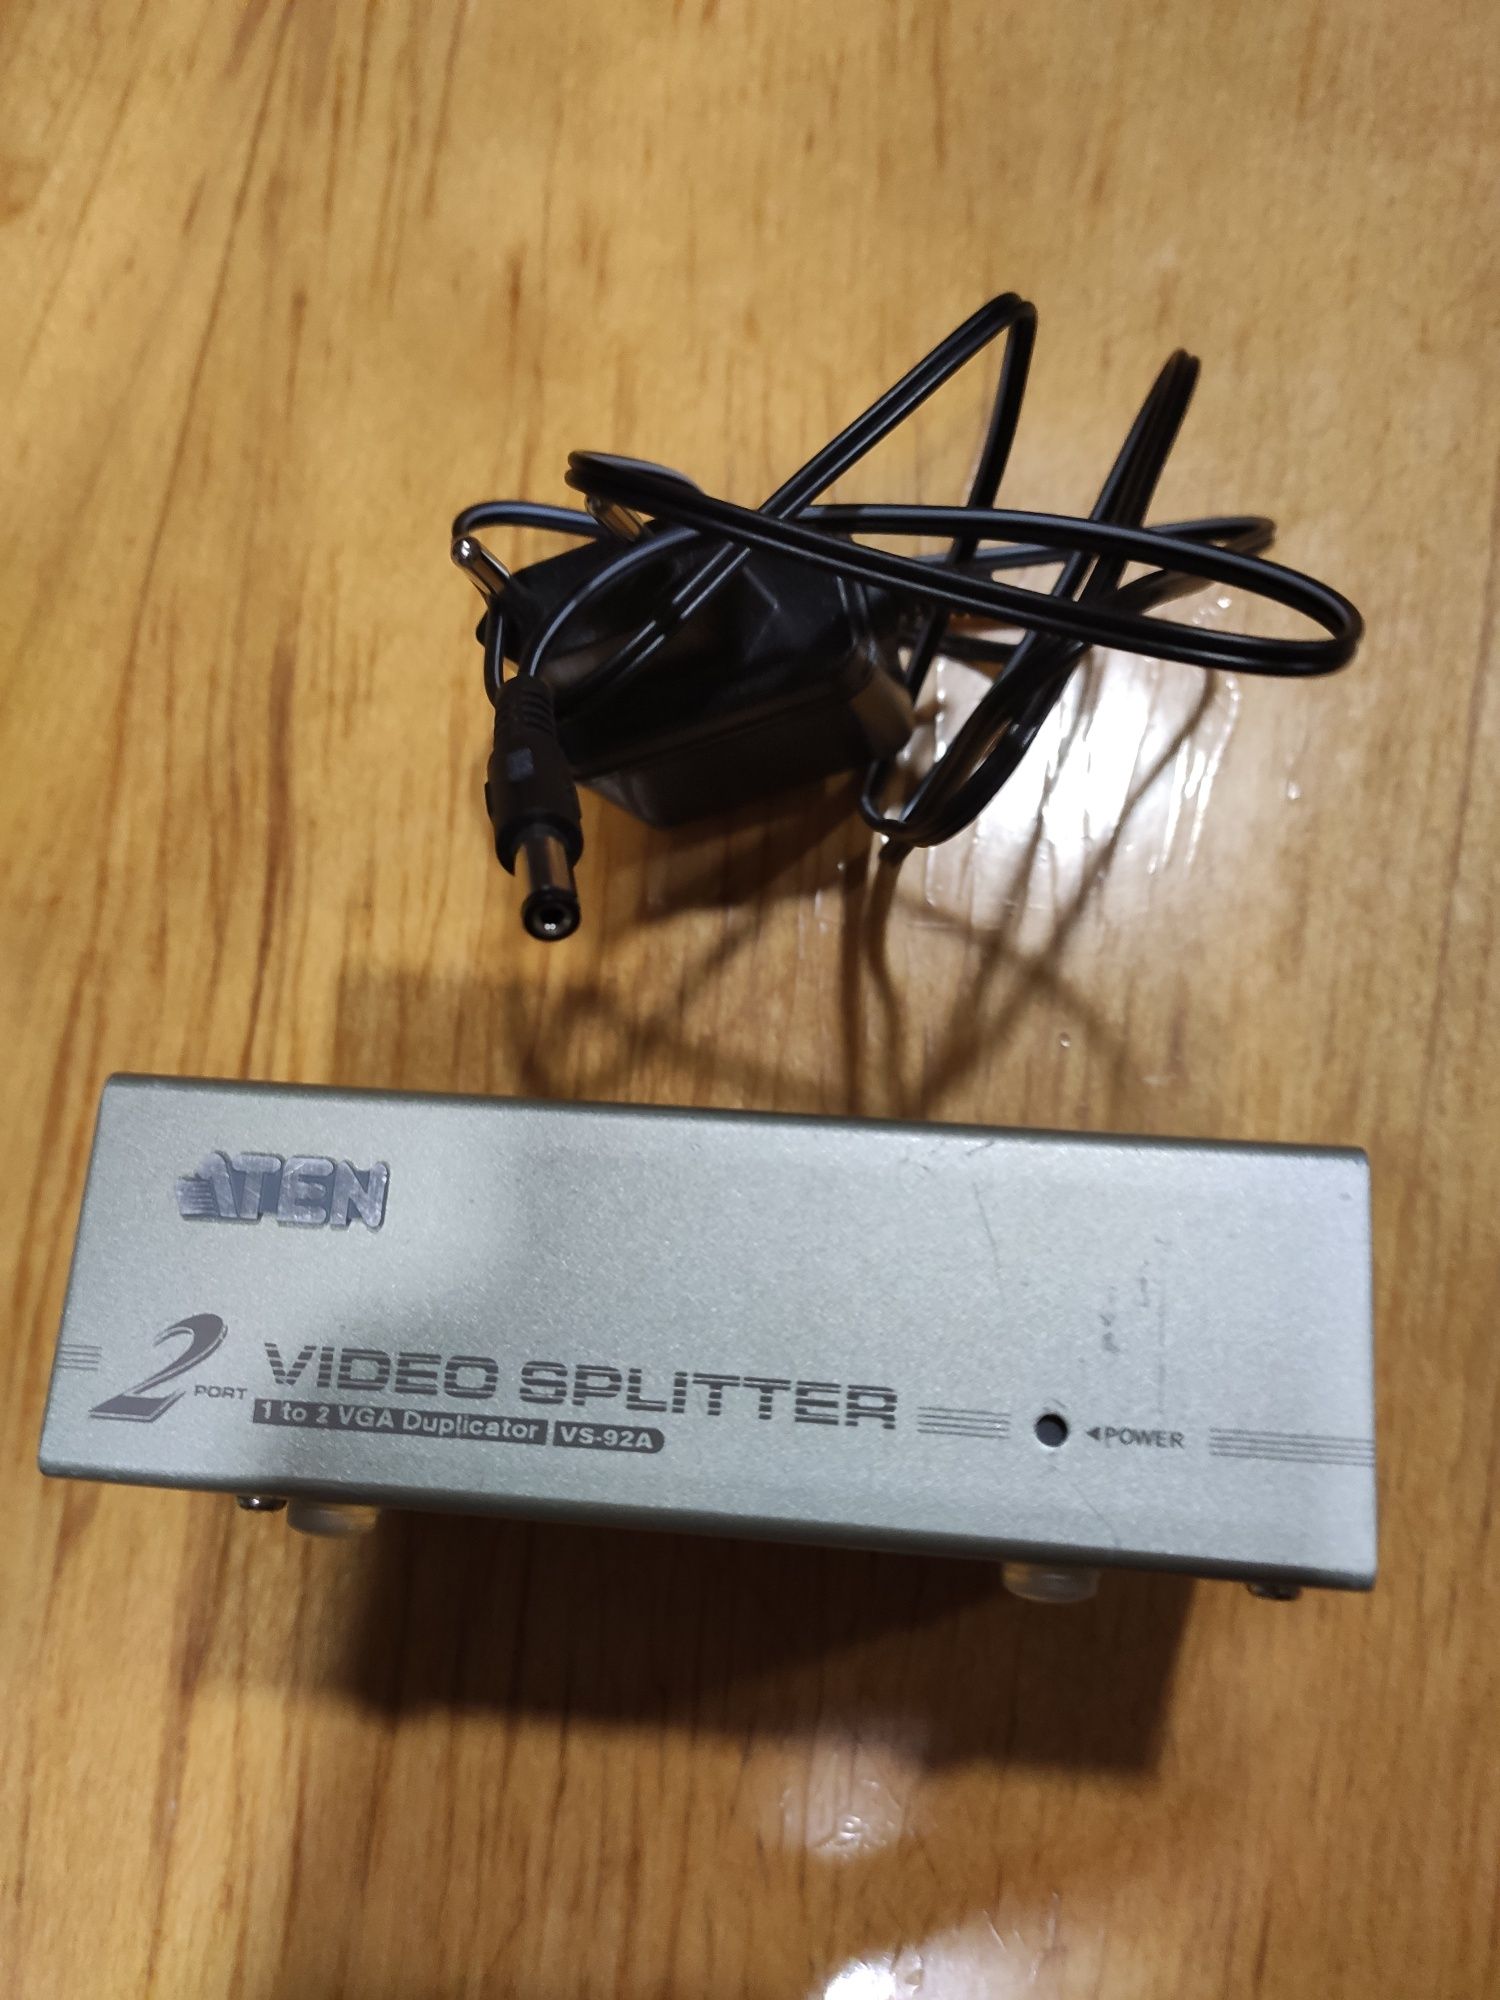 Видео сплиттер, повторитель видео сигнала splitter video